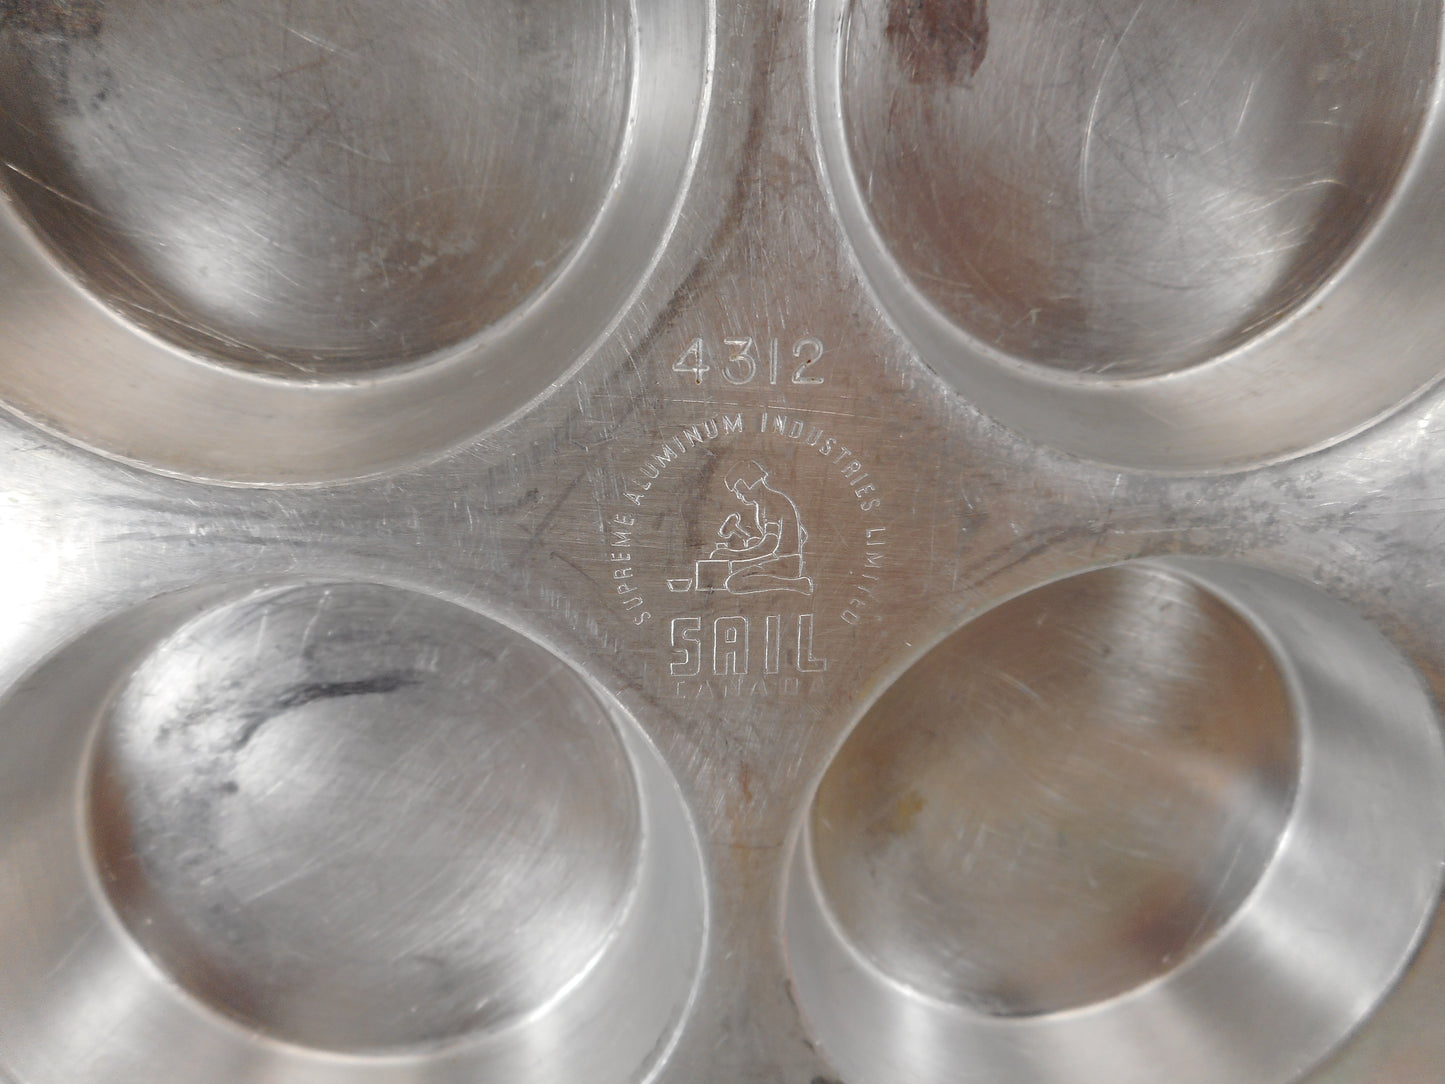 SAIL Canada Supreme Aluminum Industries Ltd. Pair Muffin Tart Baking Pans 12 Hole